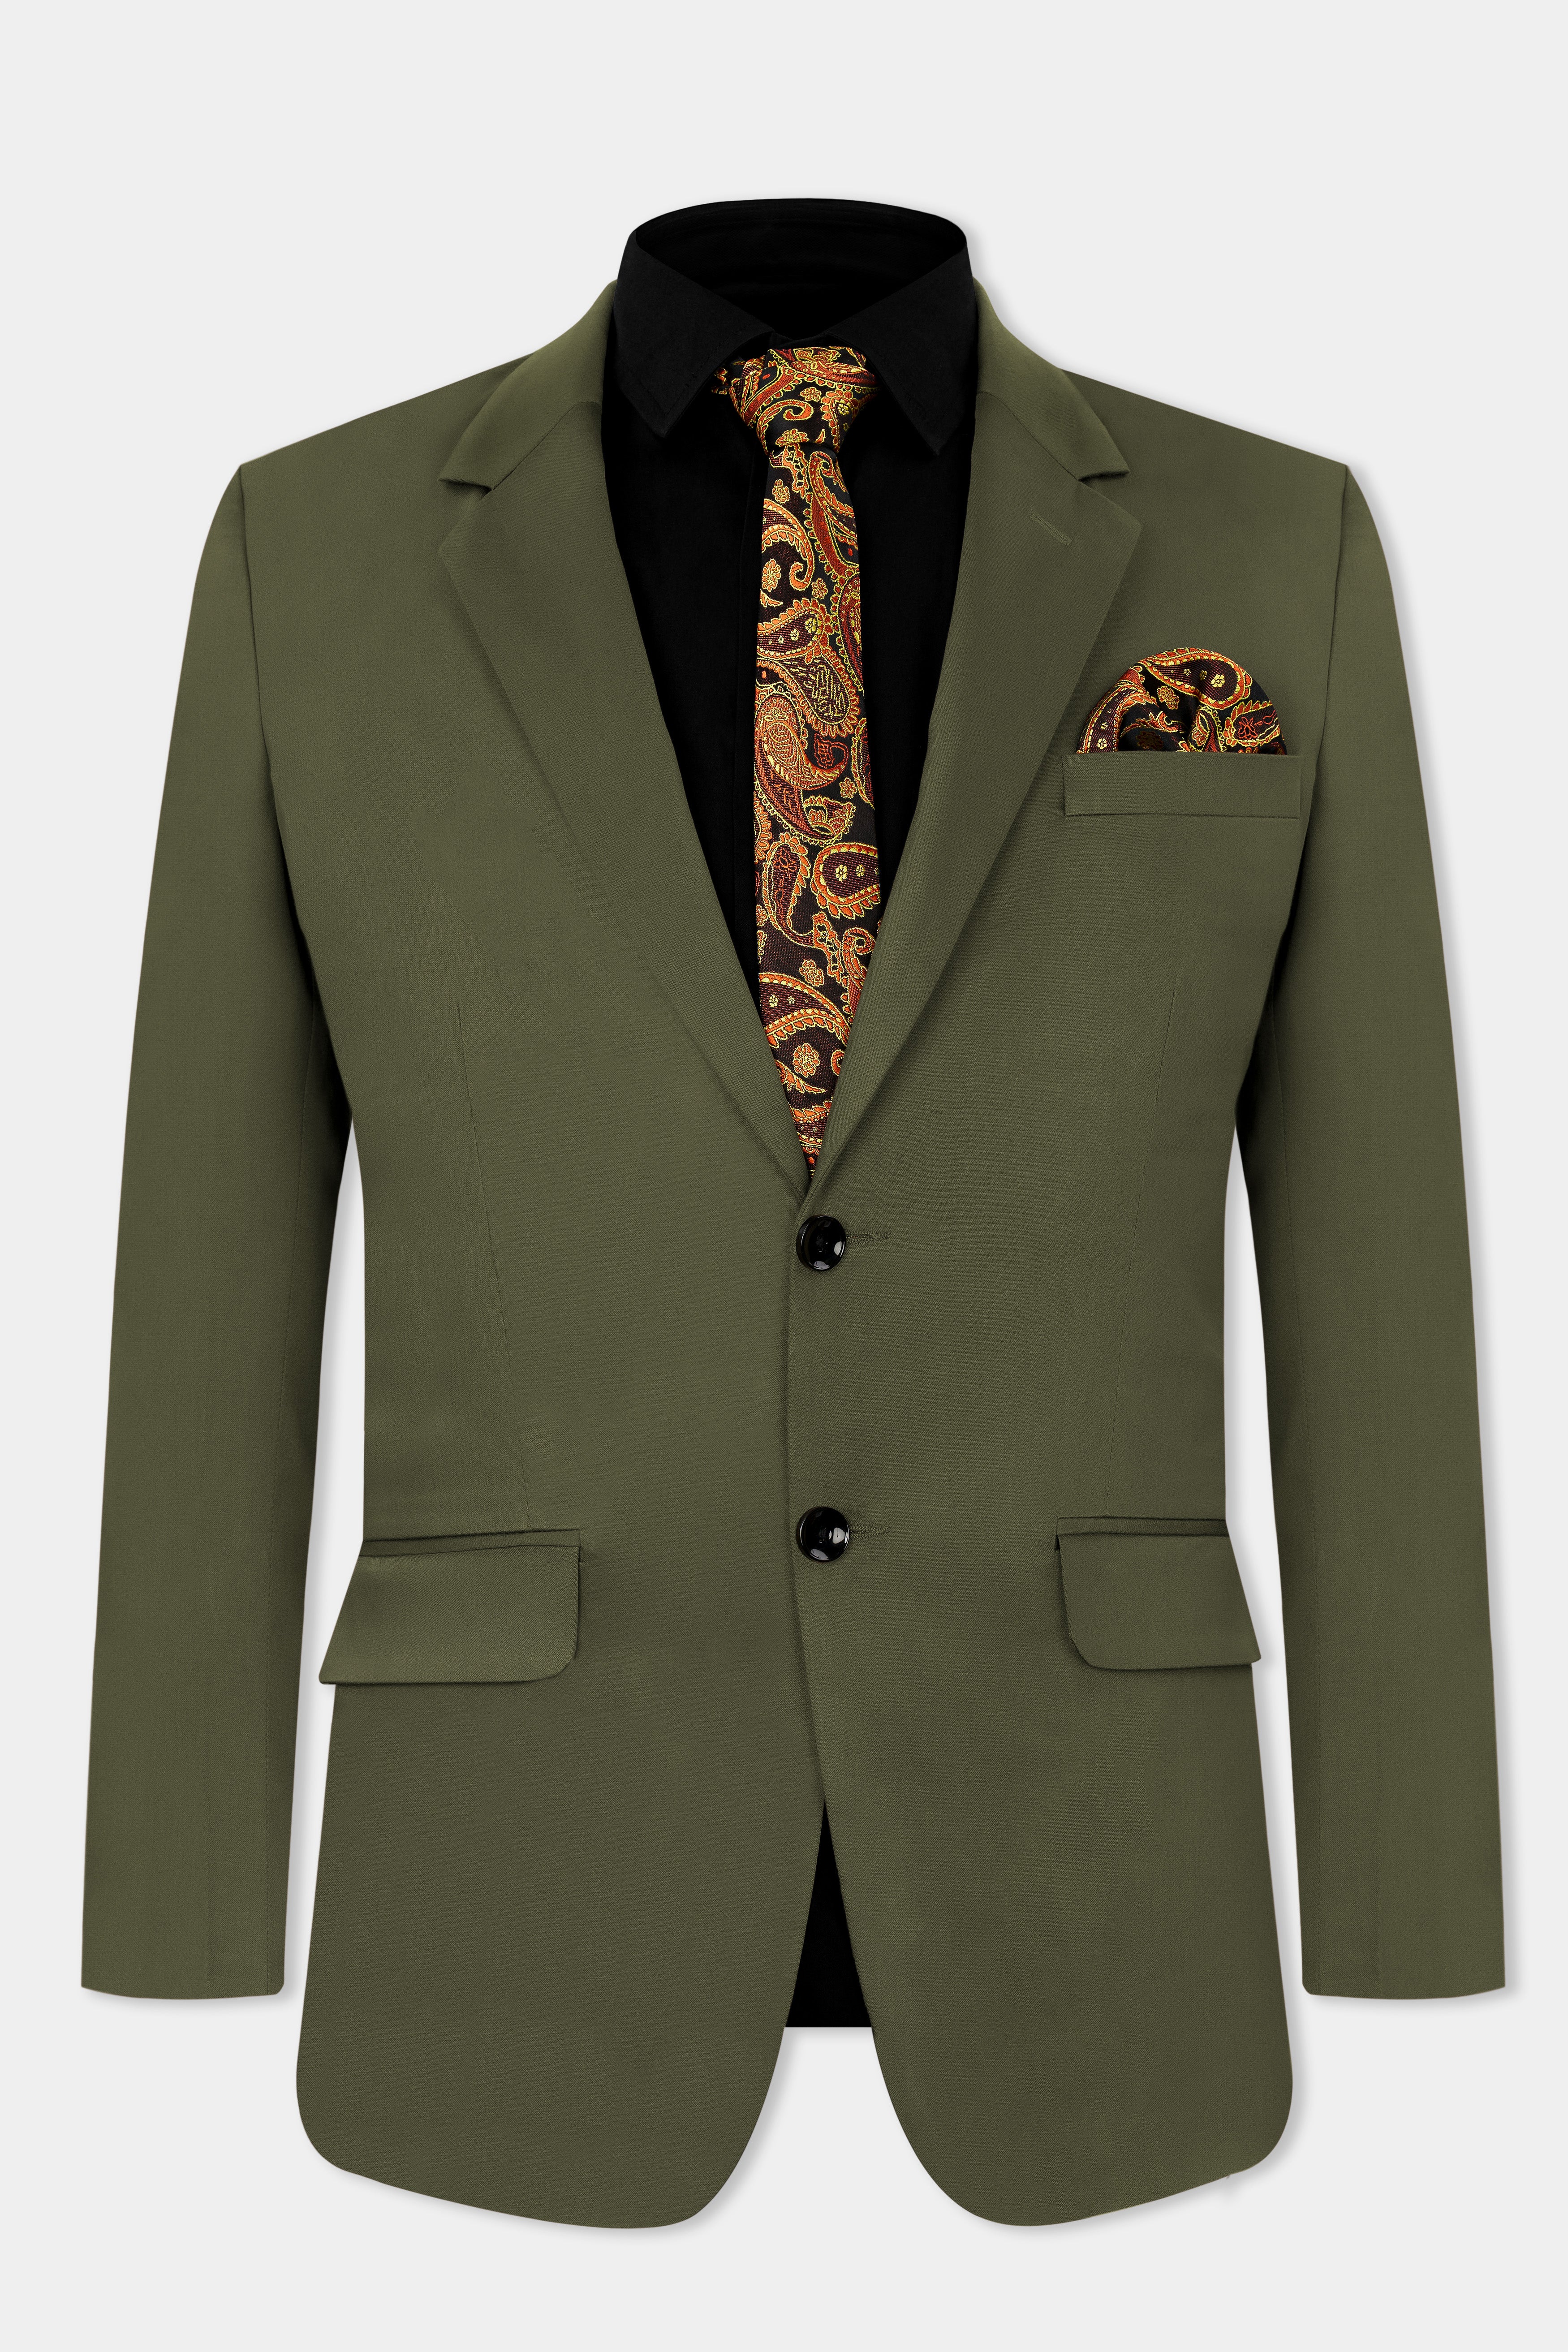 Gable Green Plain-Solid Premium Wool Blend Bandhgala/Jodhpuri Suits for Men.